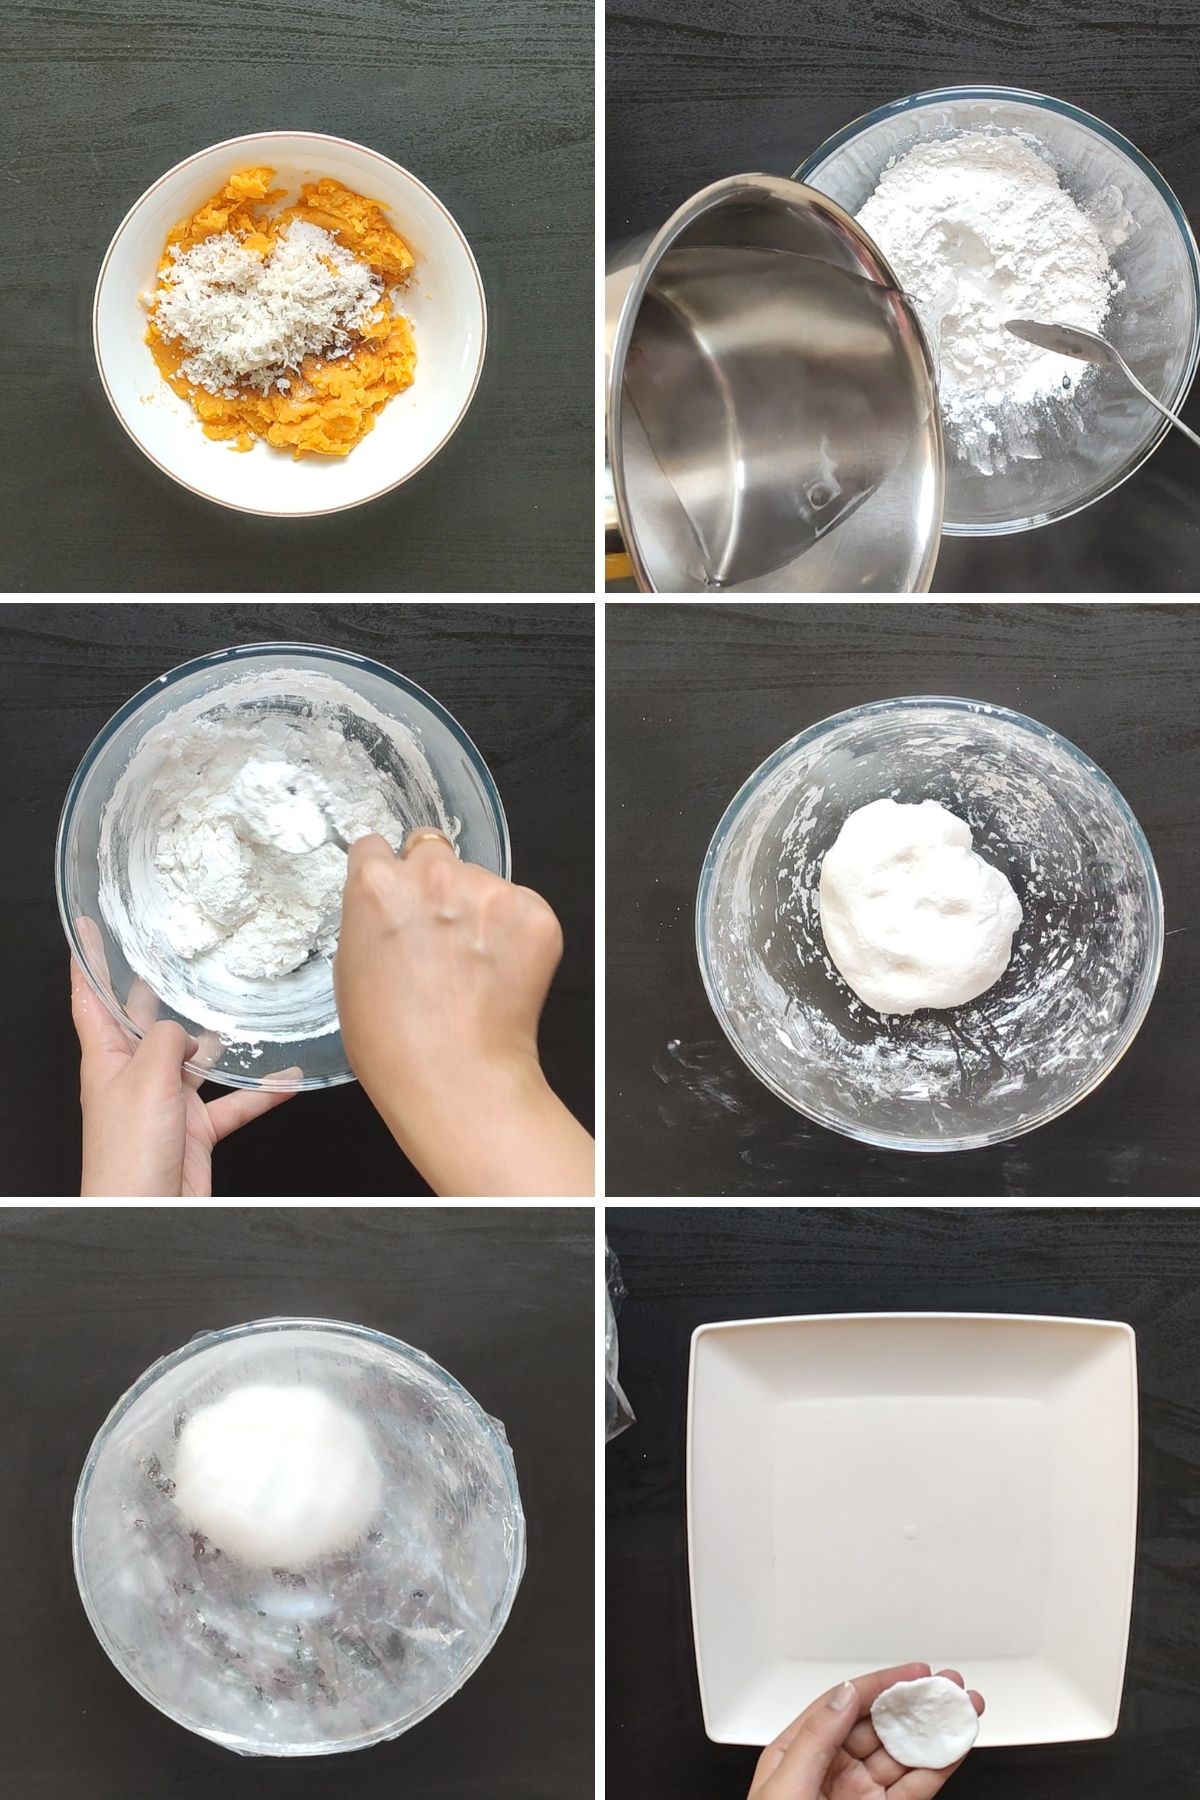 Steps to make sweet potato dumplings